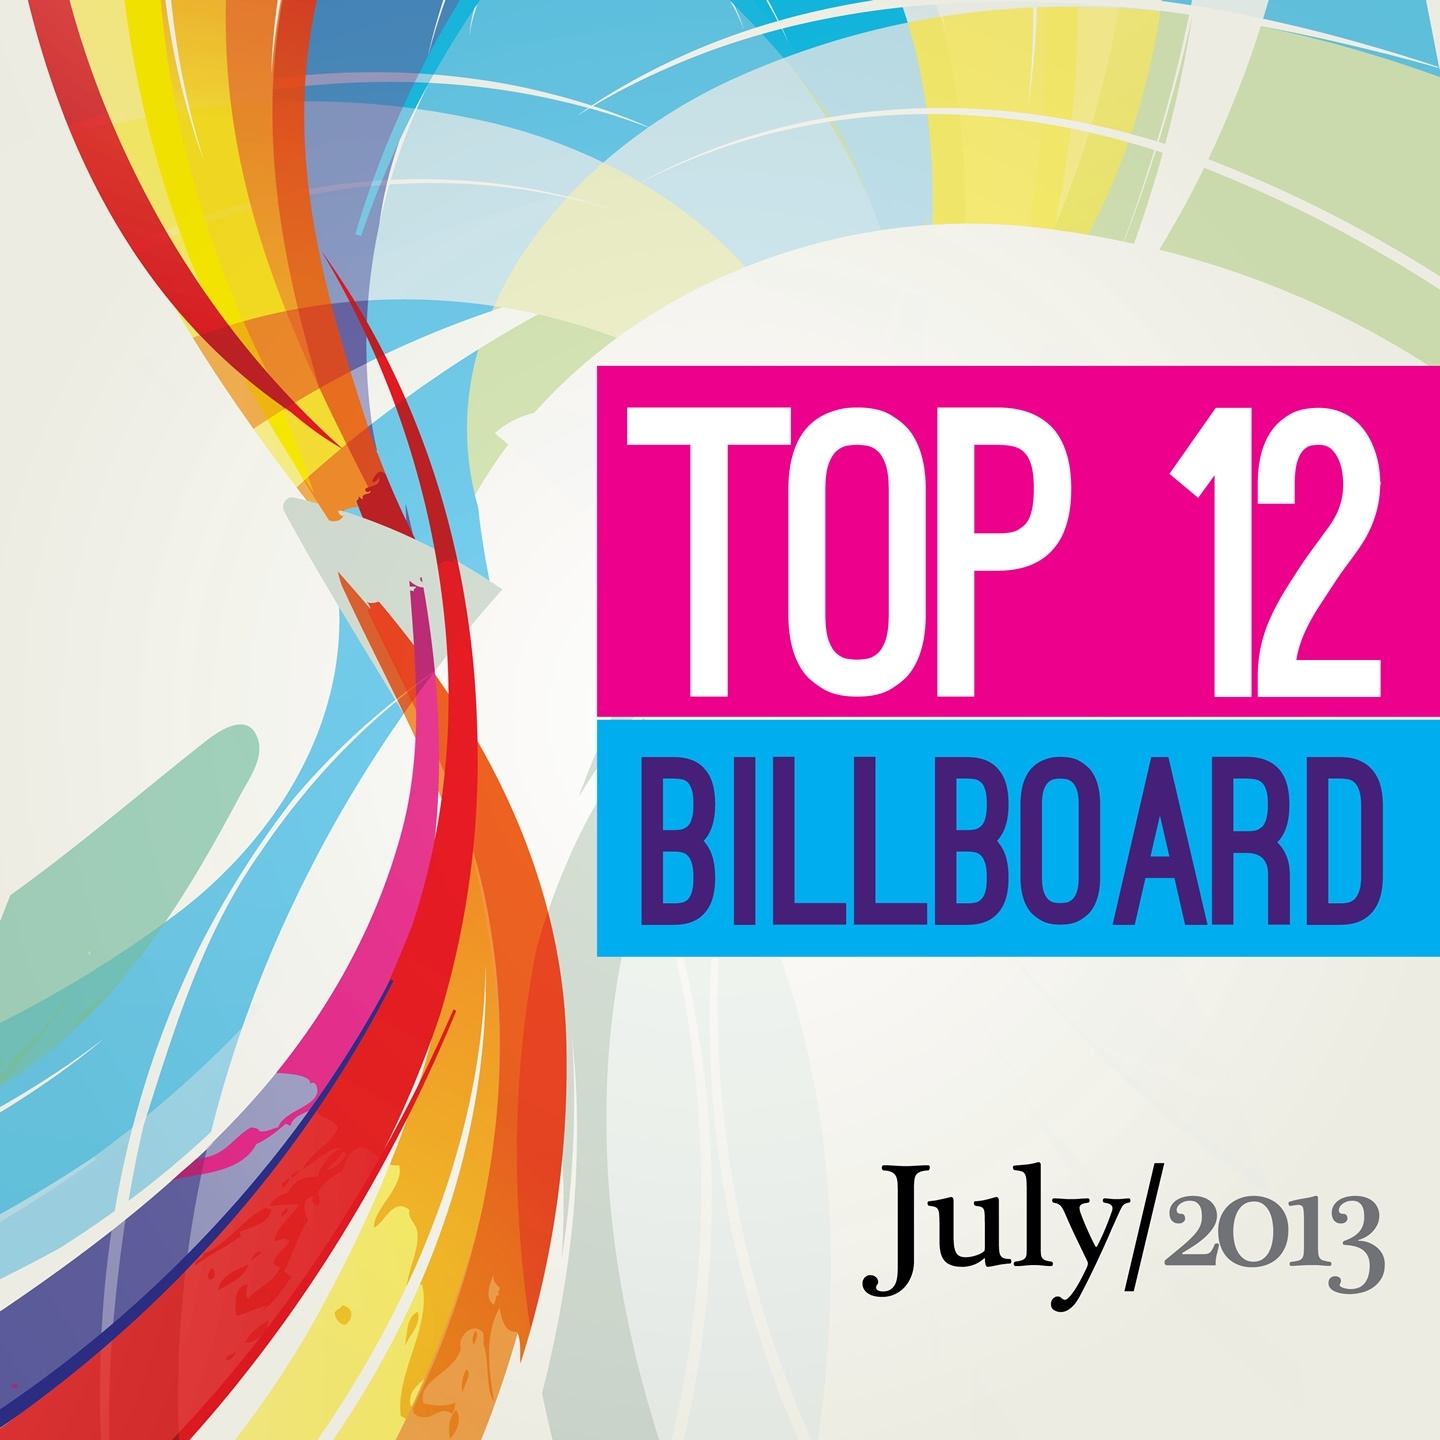 Top 12 Billboard